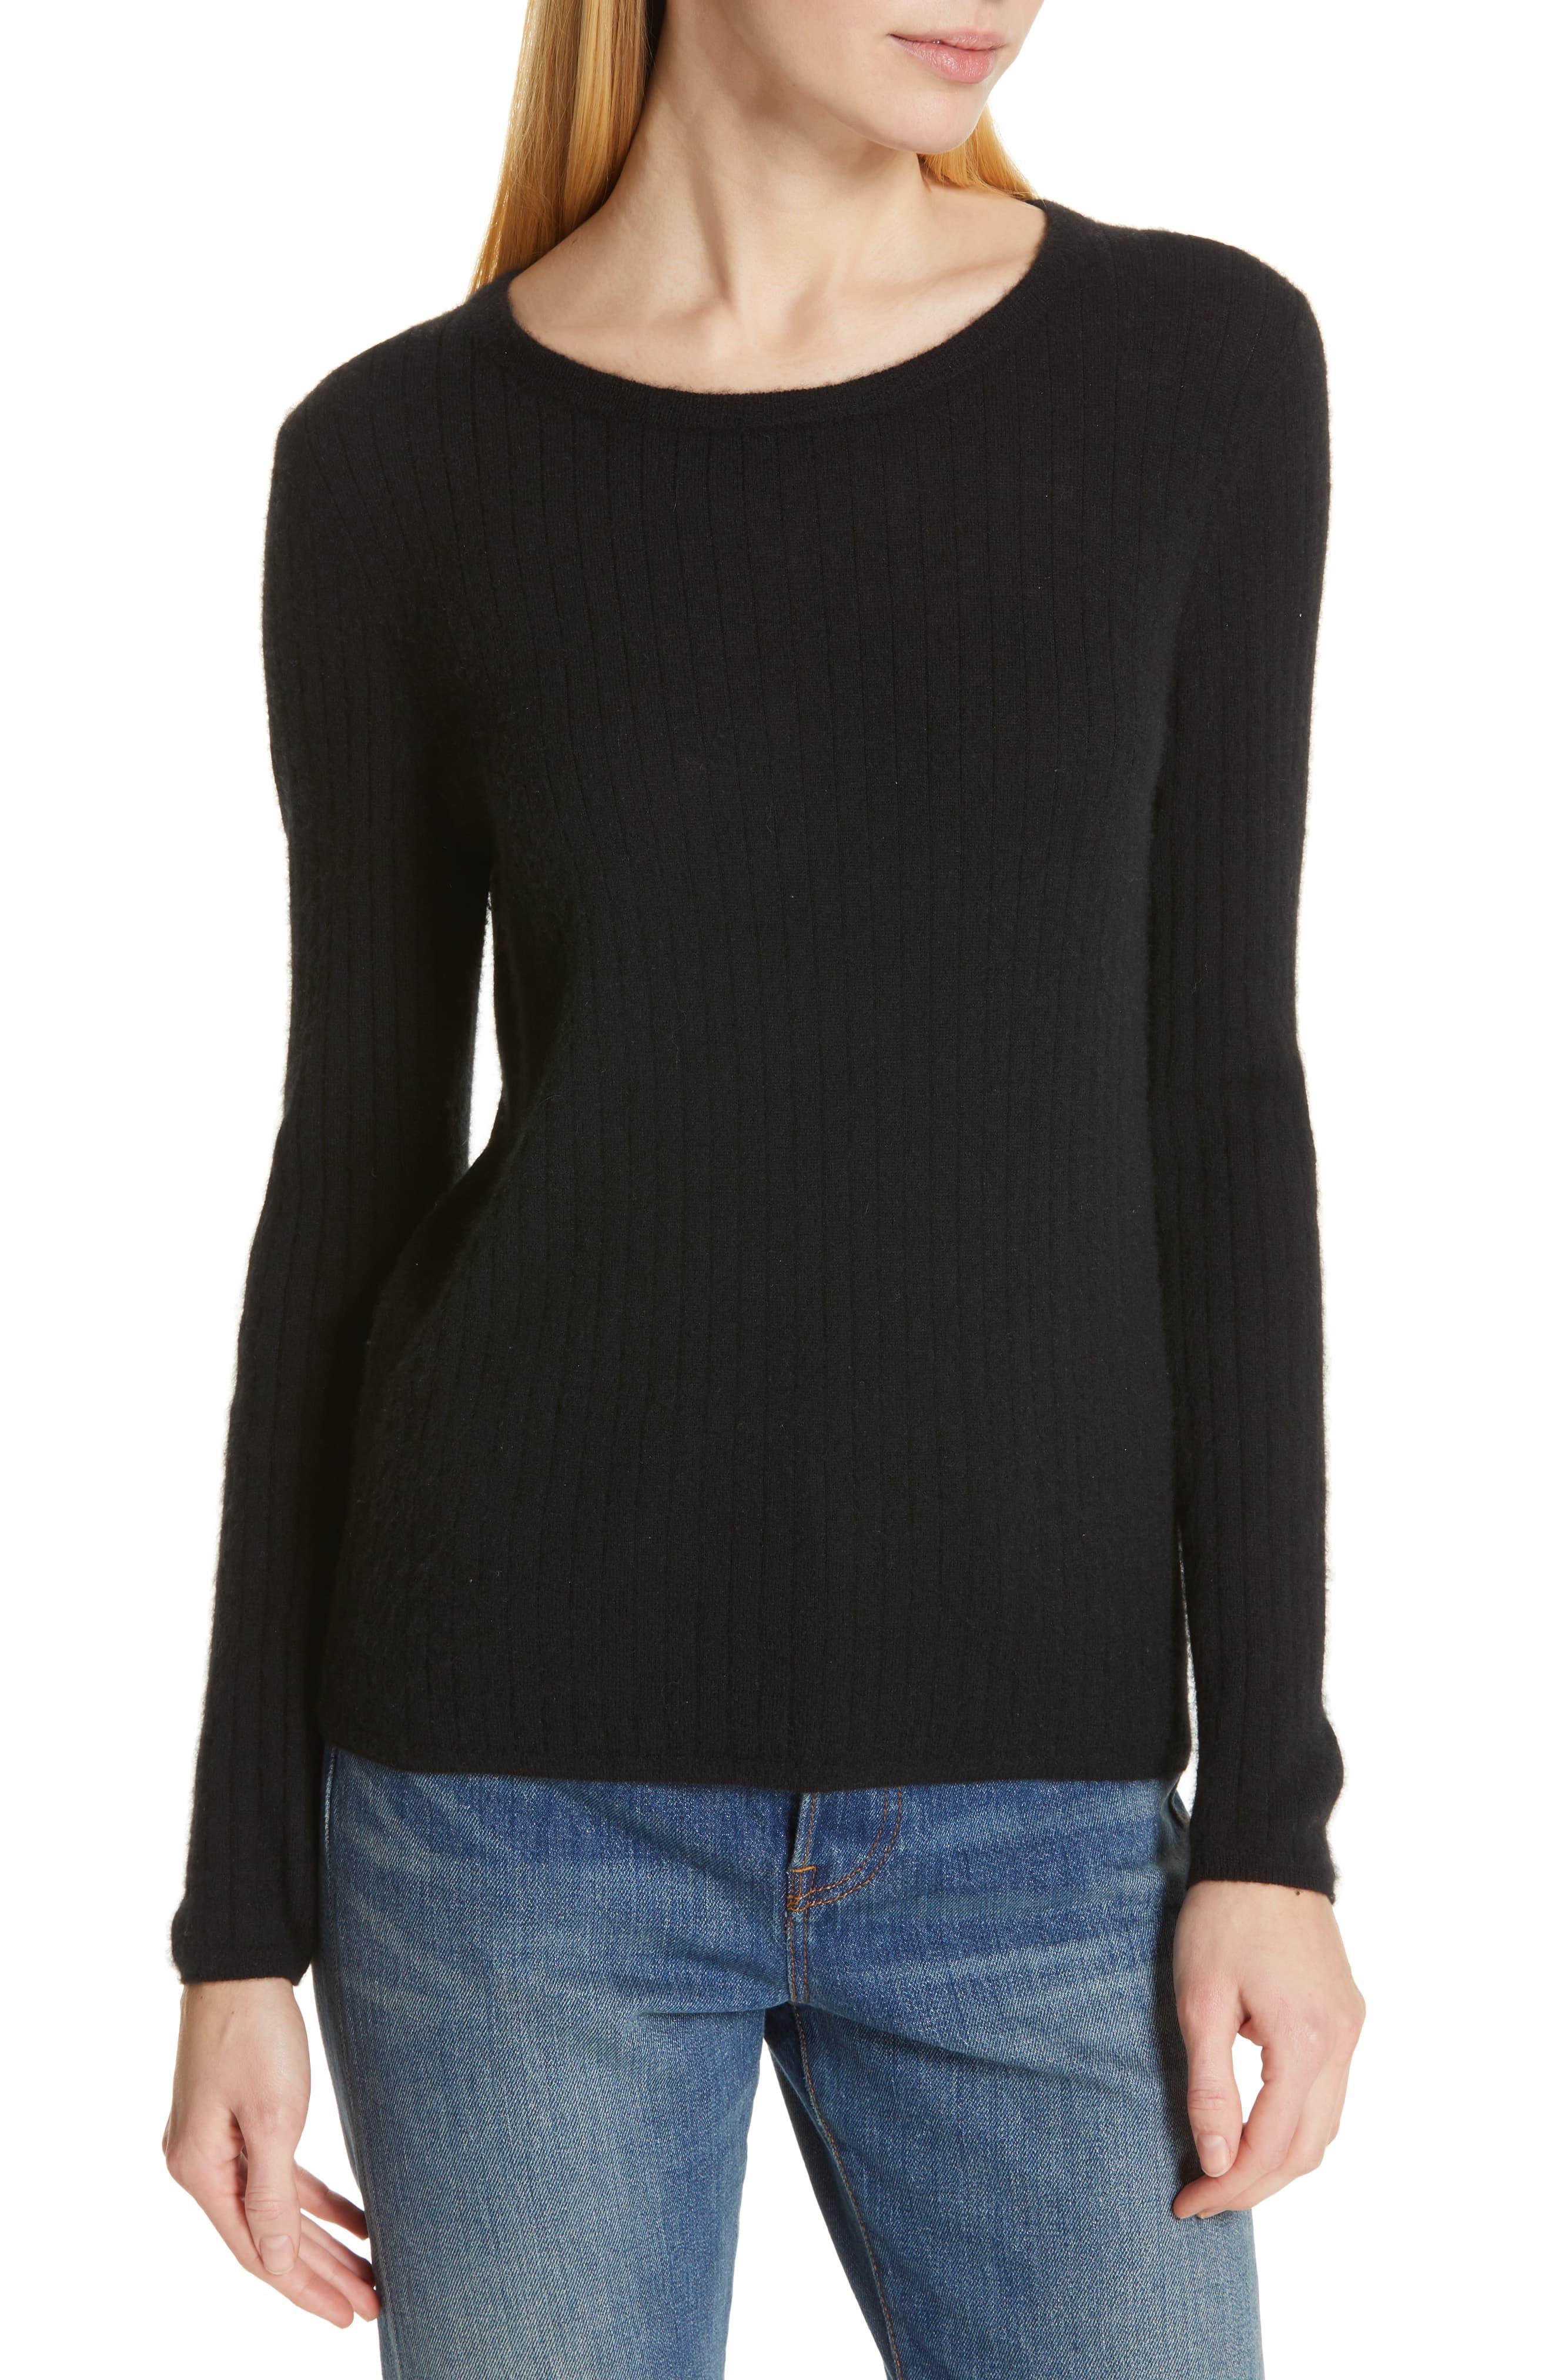 Jenni Kayne Silk & Cashmere Sweater in Black - Lyst